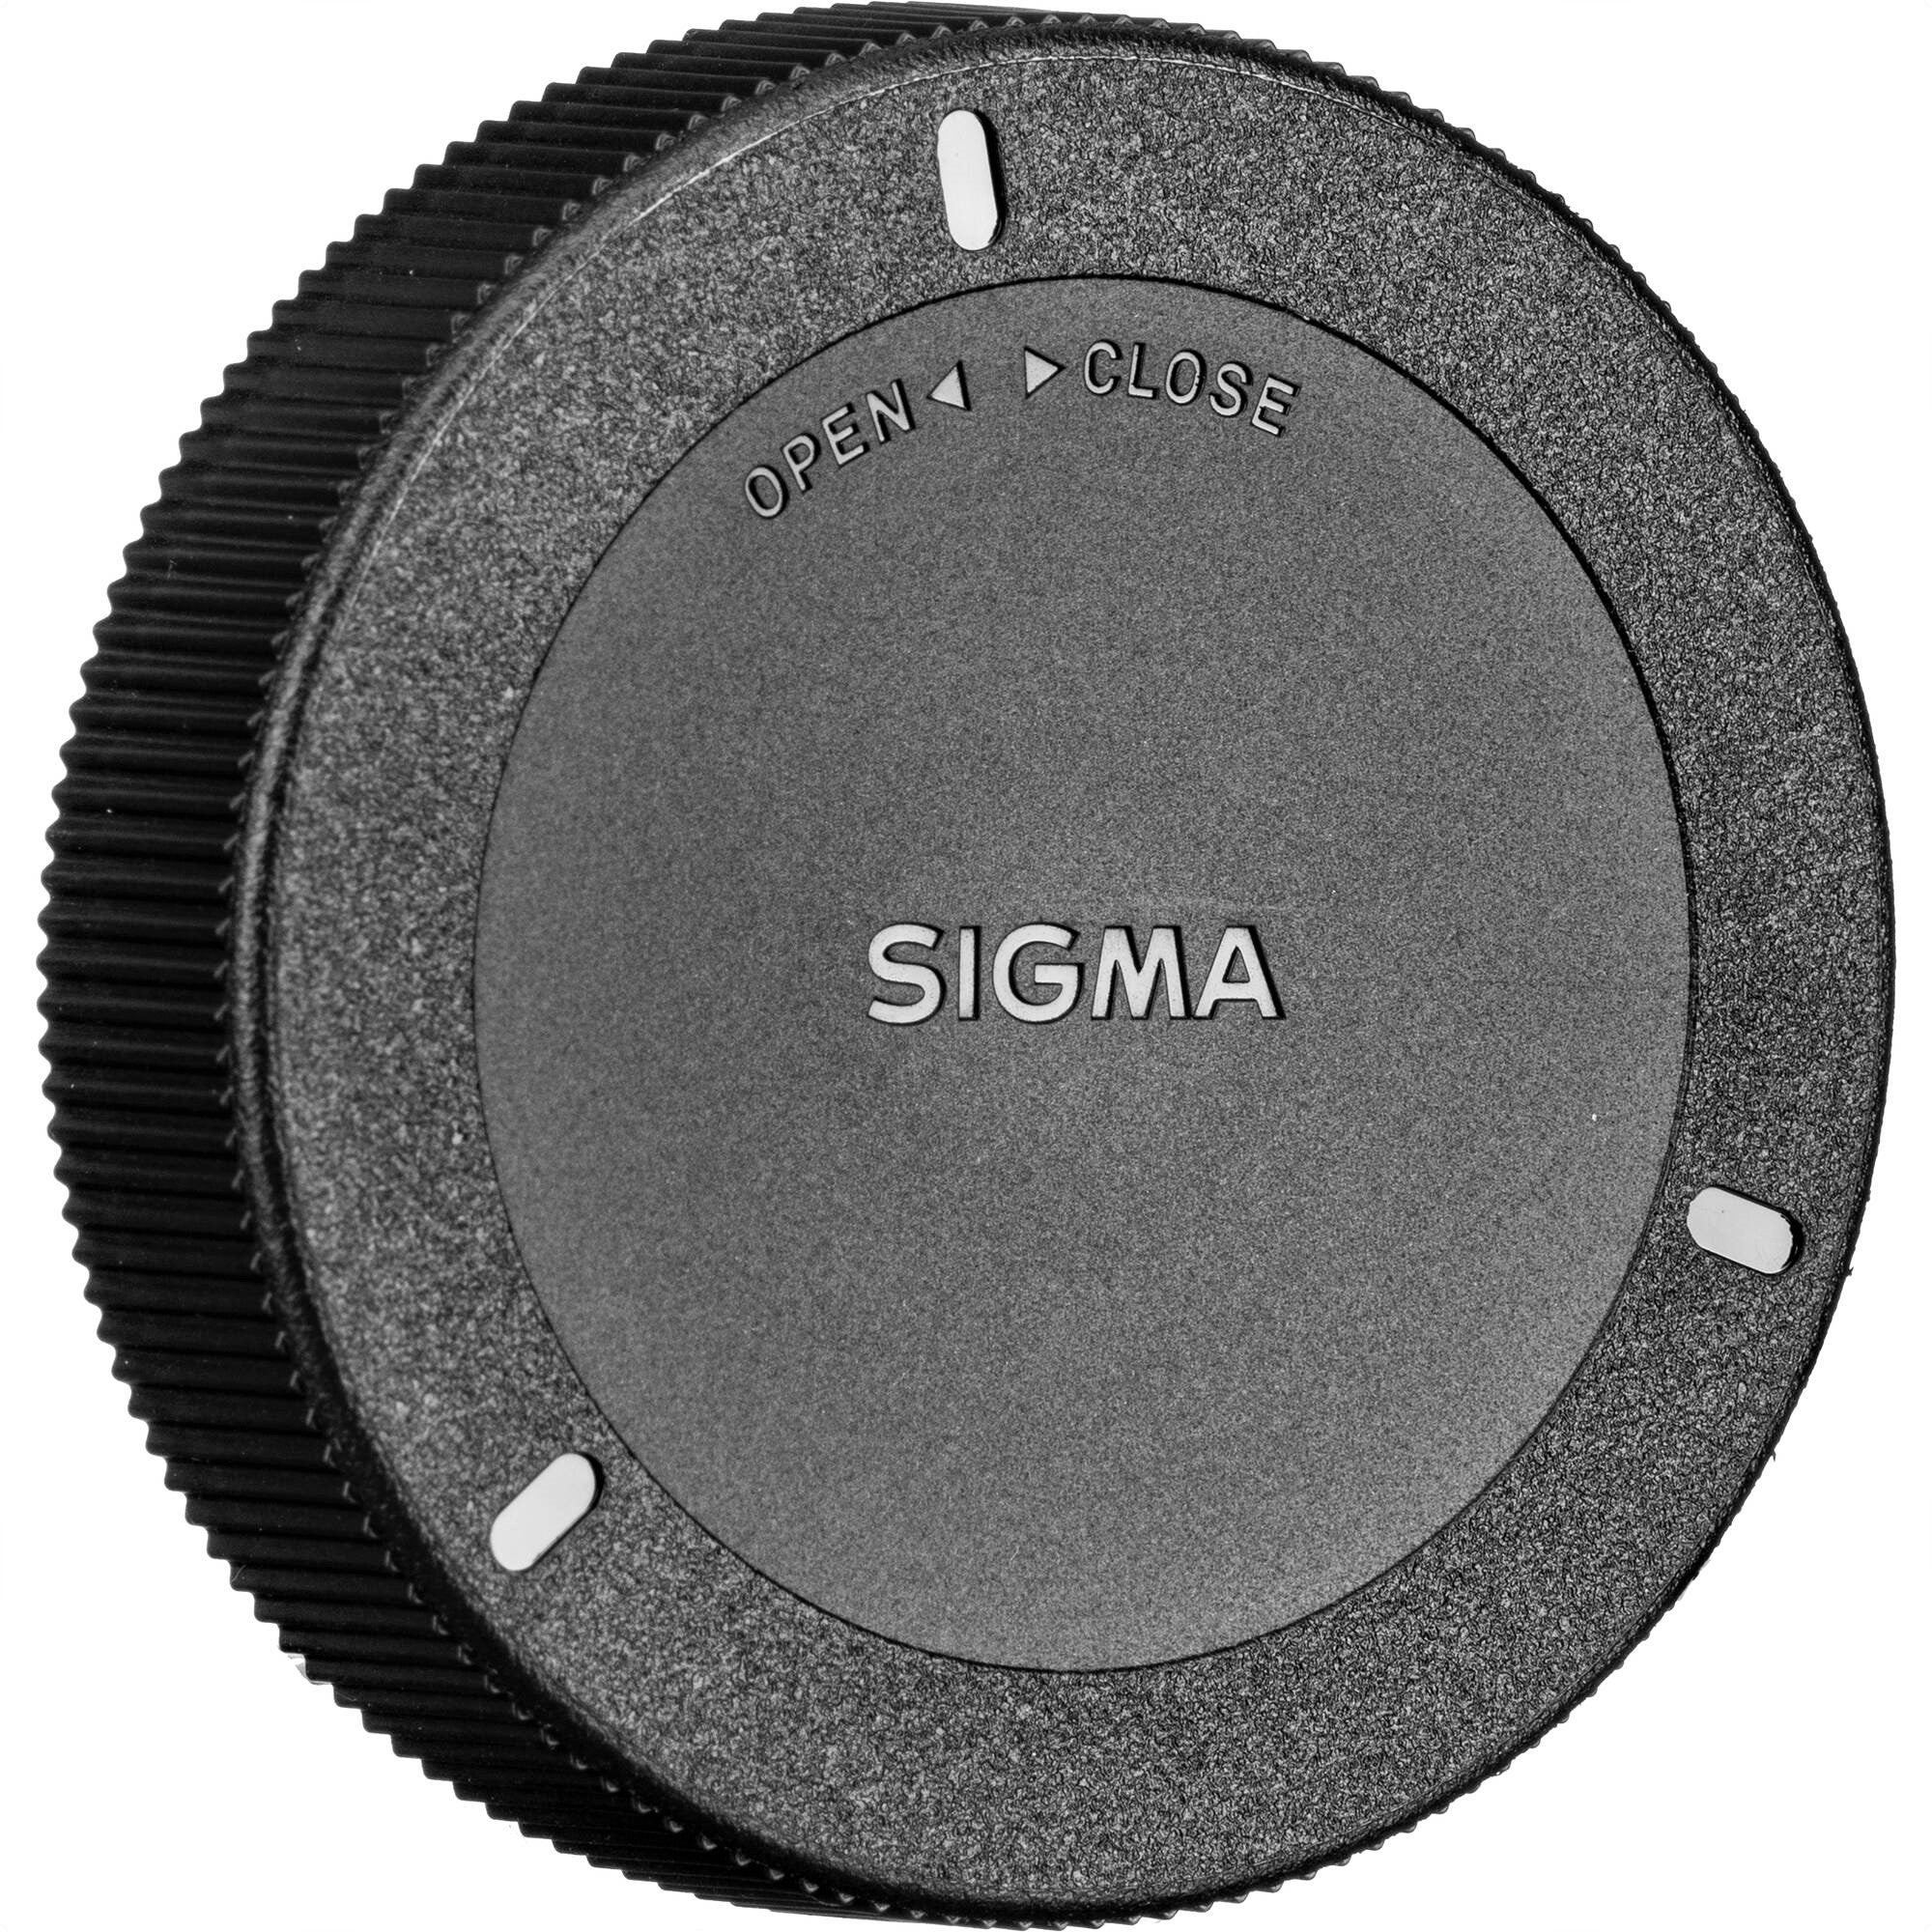 Sigma LCR II Rear Lens Cap for Sigma SA